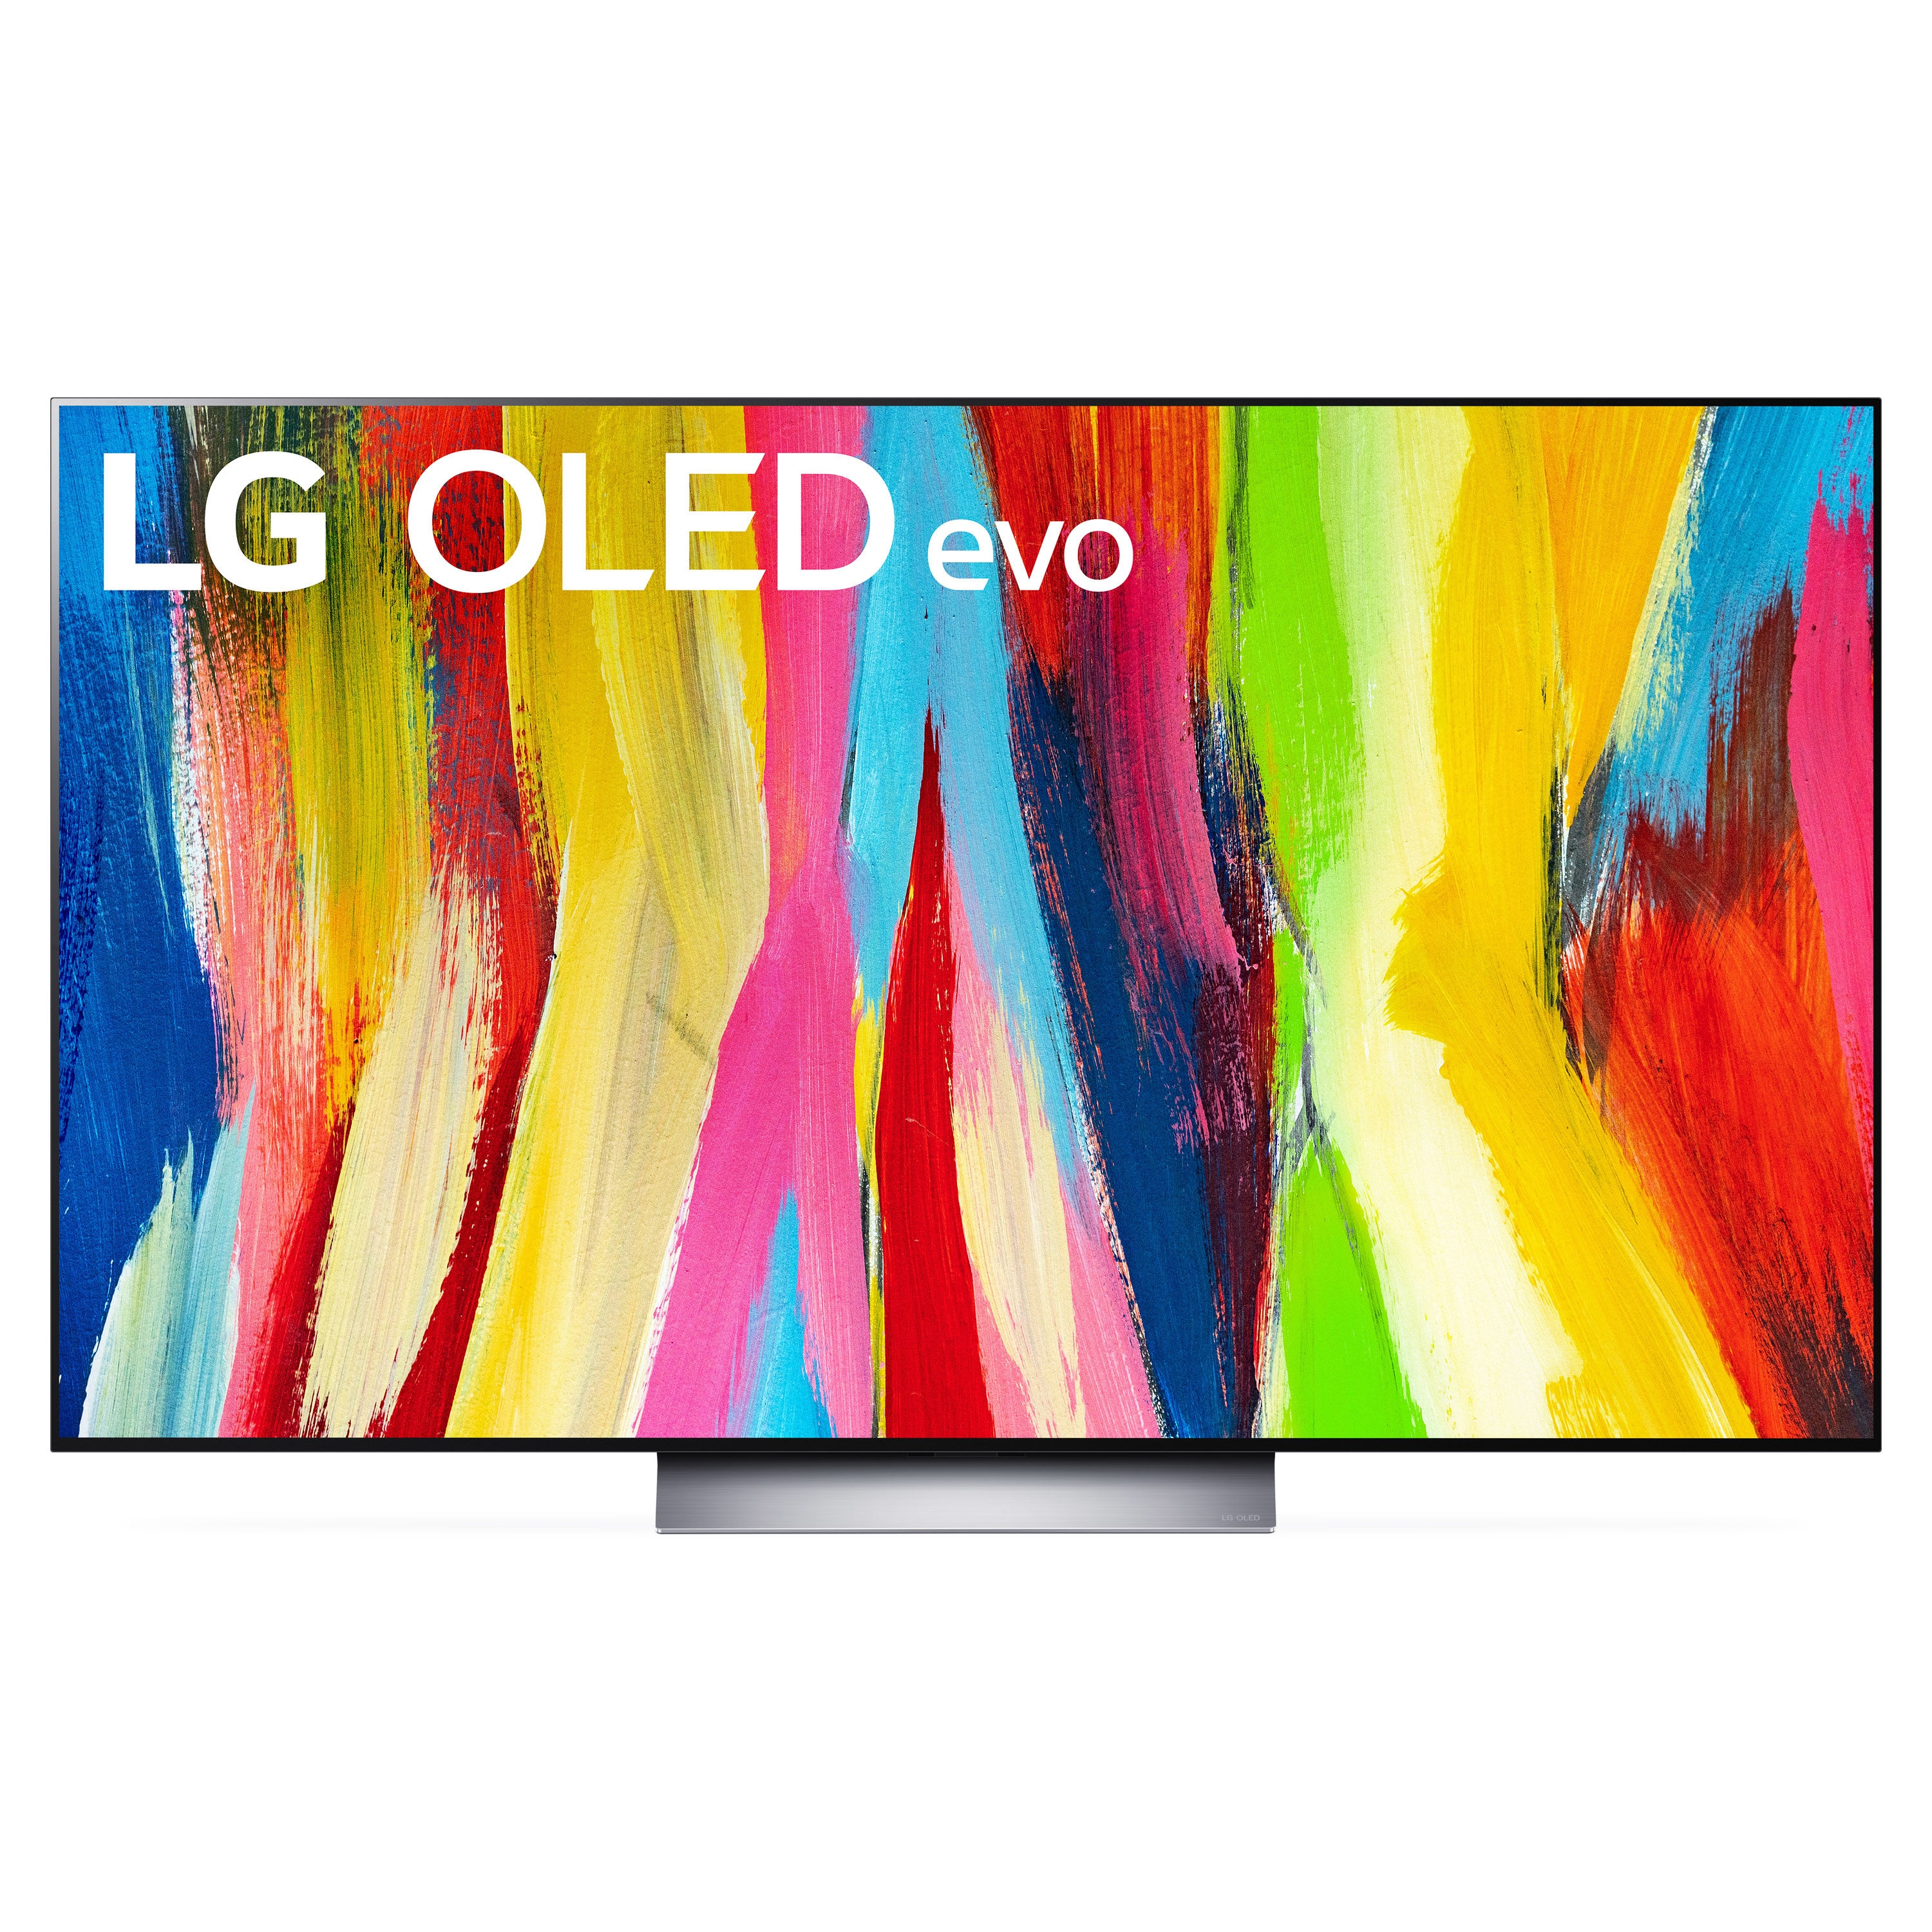 LG 4K OLED Smart TV 55 inch Series CS, a9 Gen5 4K Processor, G